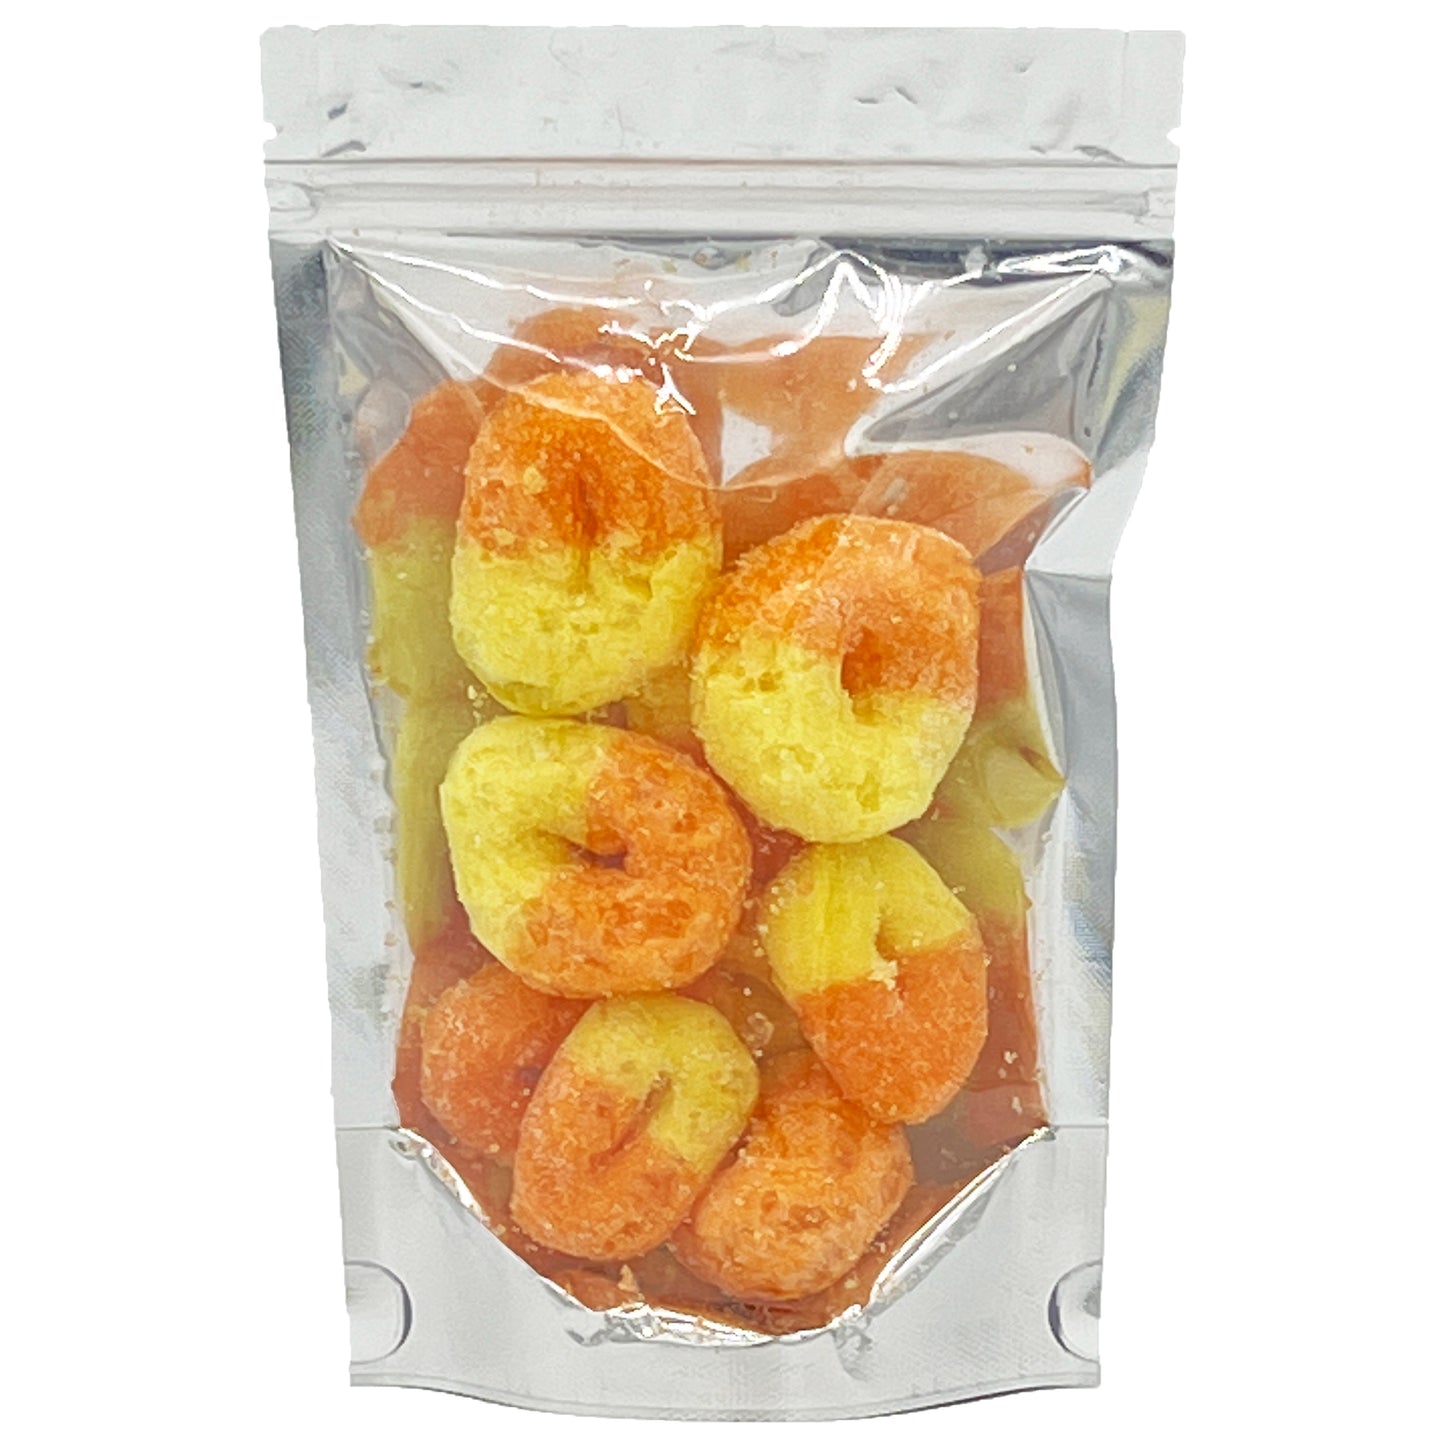 Freeze Dried Candy Peach Rings Crispy Treats, 2 oz